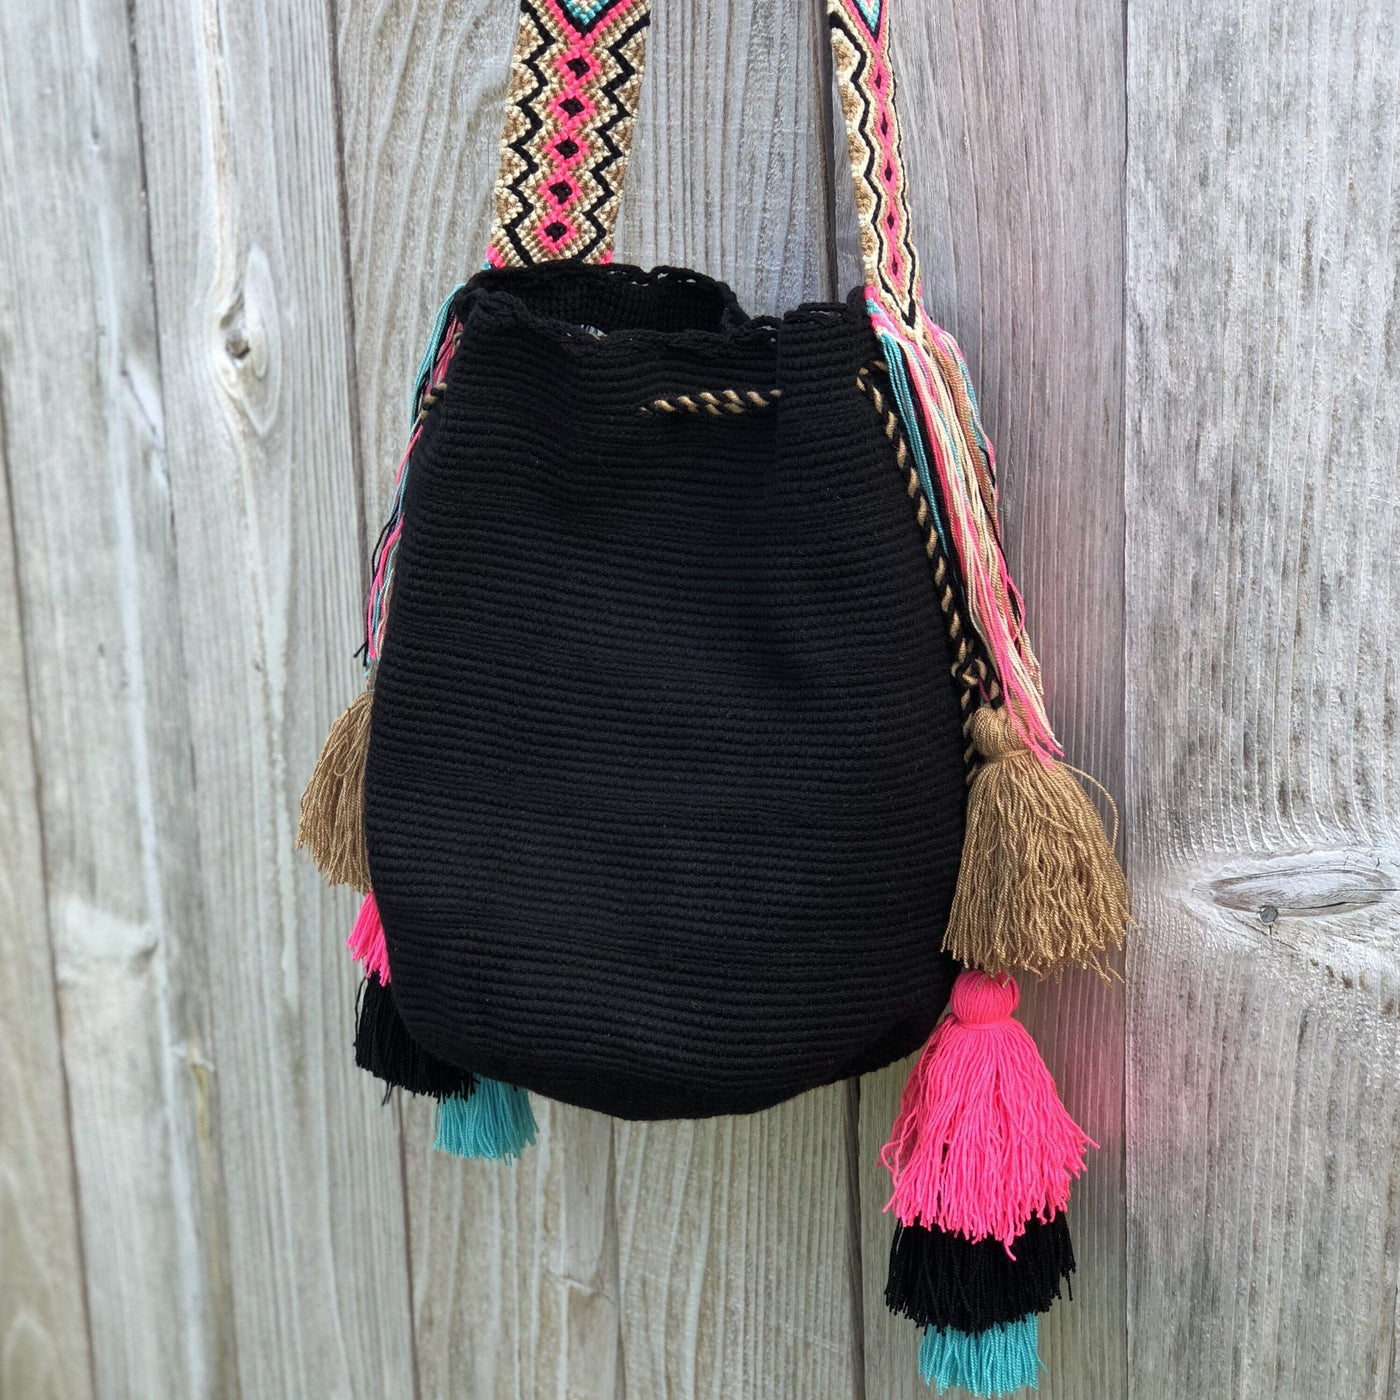 Black -Pink Colorful Bohemian Handbag with Tassels | Crossbody Bucket Crochet Bag